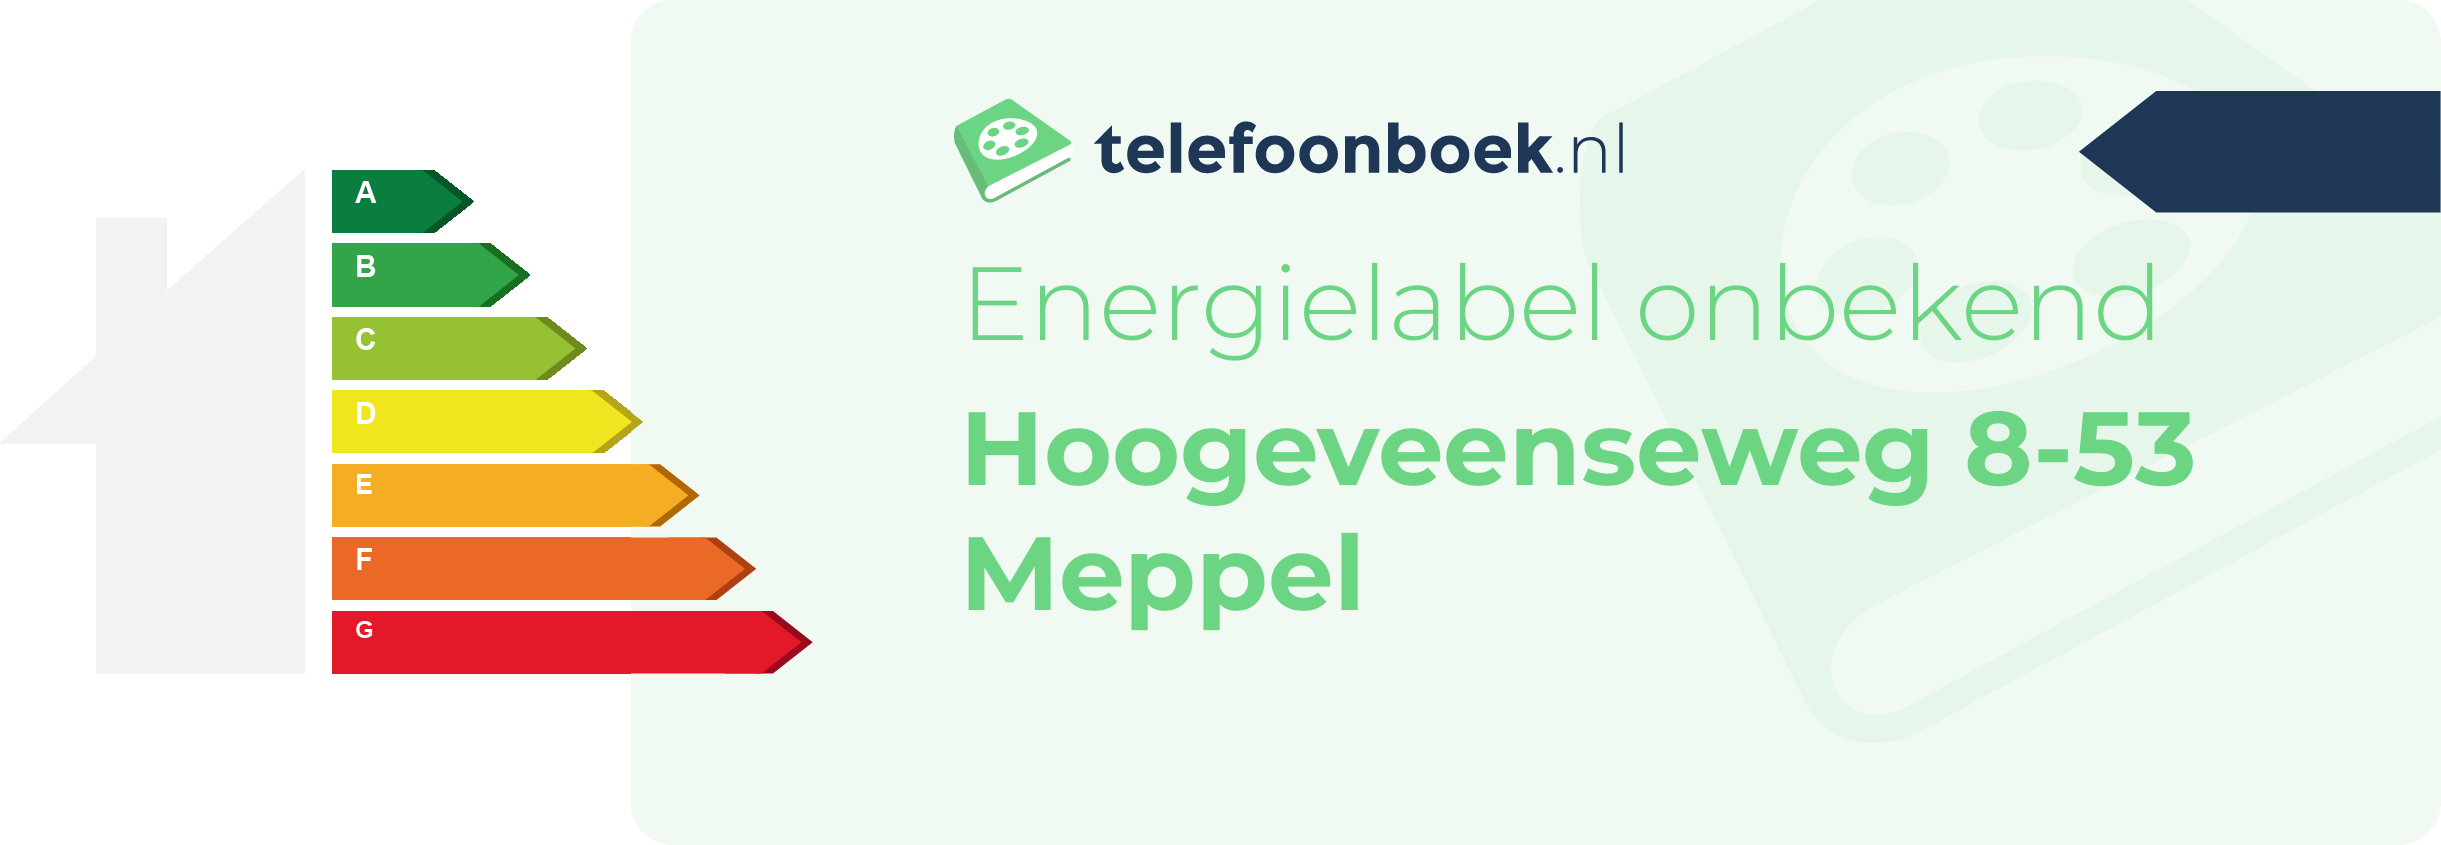 Energielabel Hoogeveenseweg 8-53 Meppel